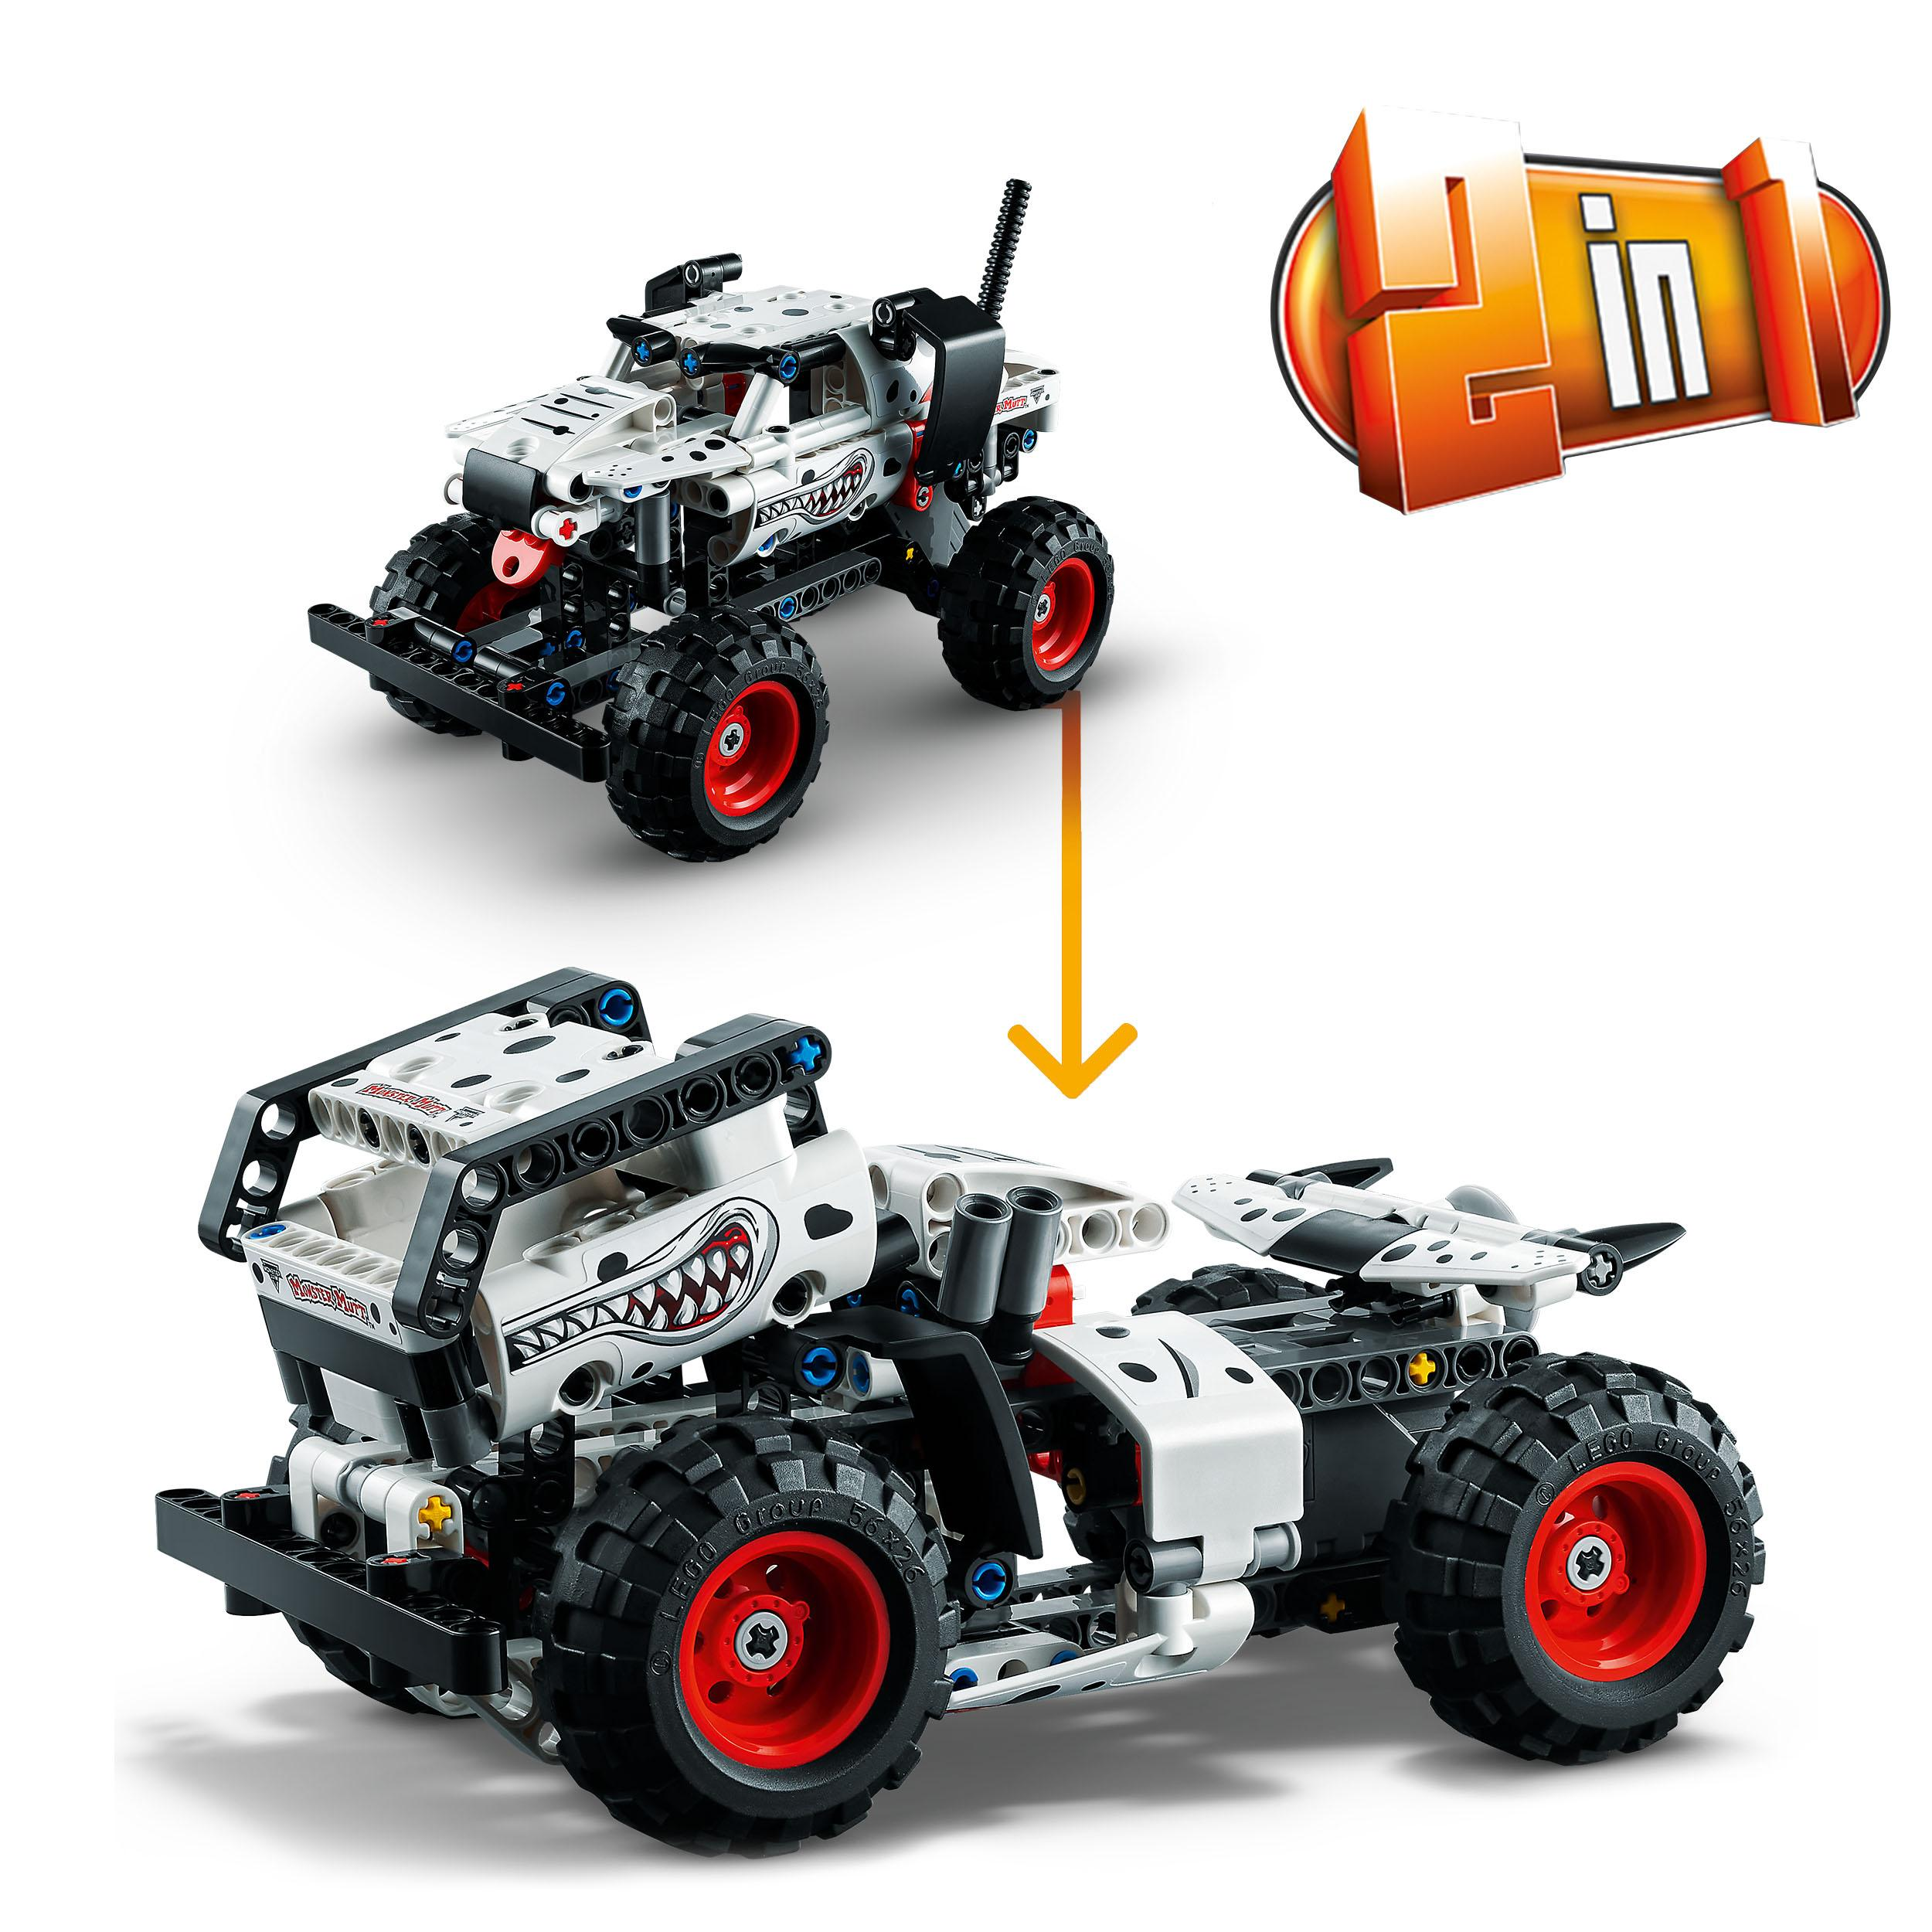 Dalmatian Technic Monster Jam™ Mutt™ 42150 LEGO Mehrfarbig Bausatz, Monster